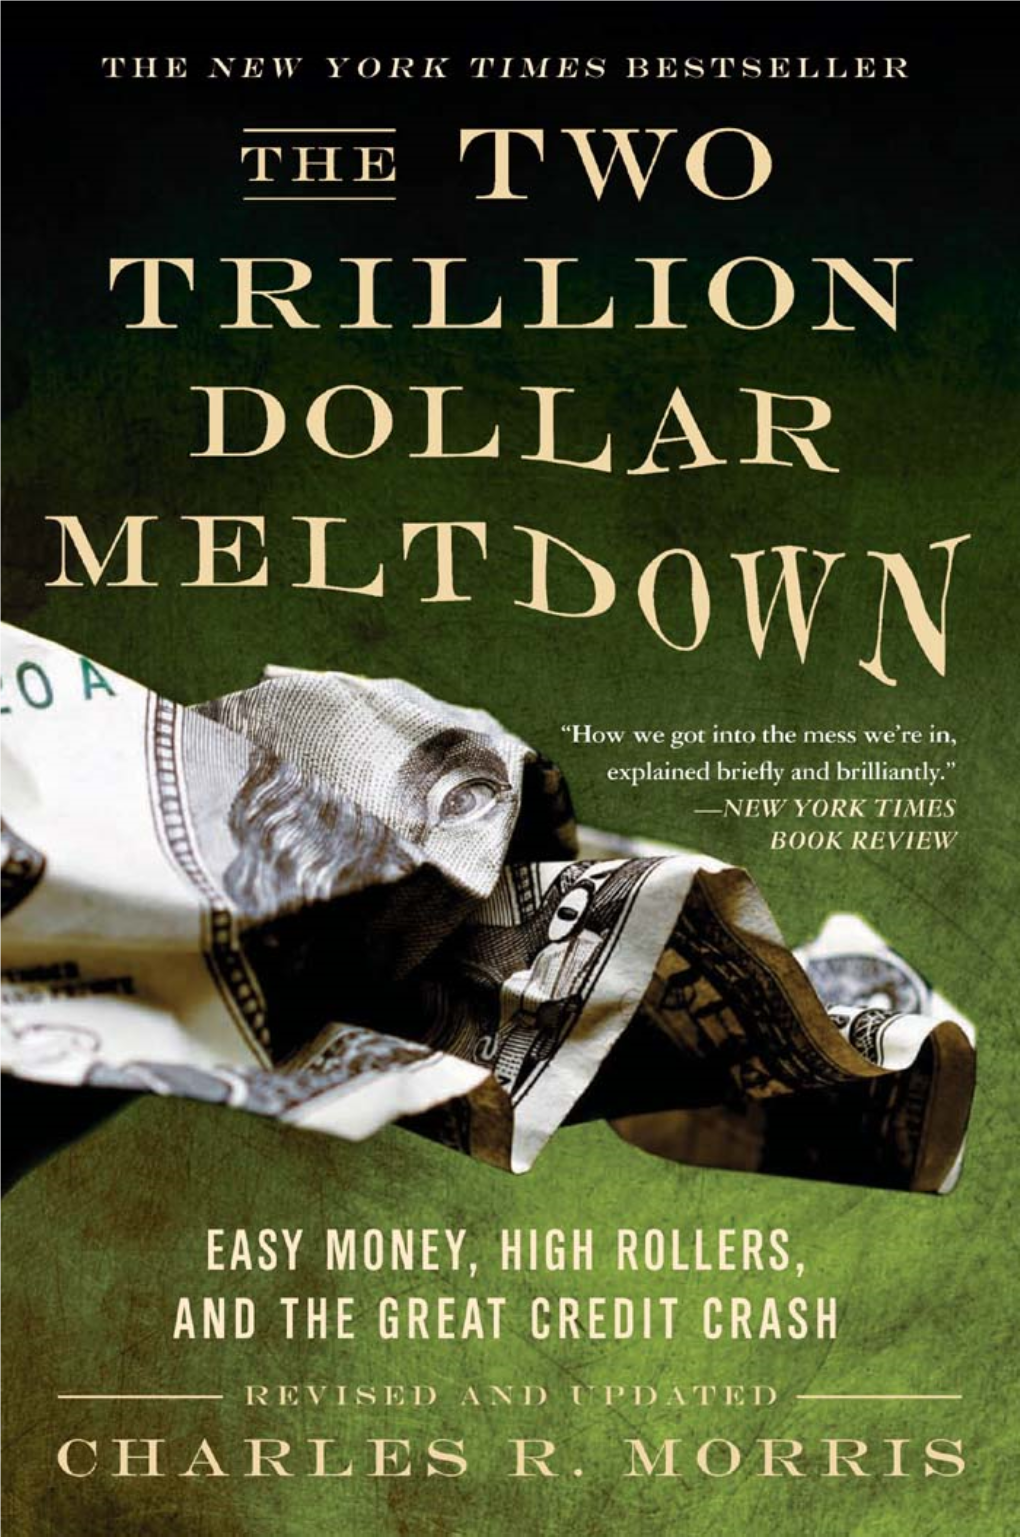 Morris C.R. the Trillion Dollar Meltdown (Publicaffairs, 2008